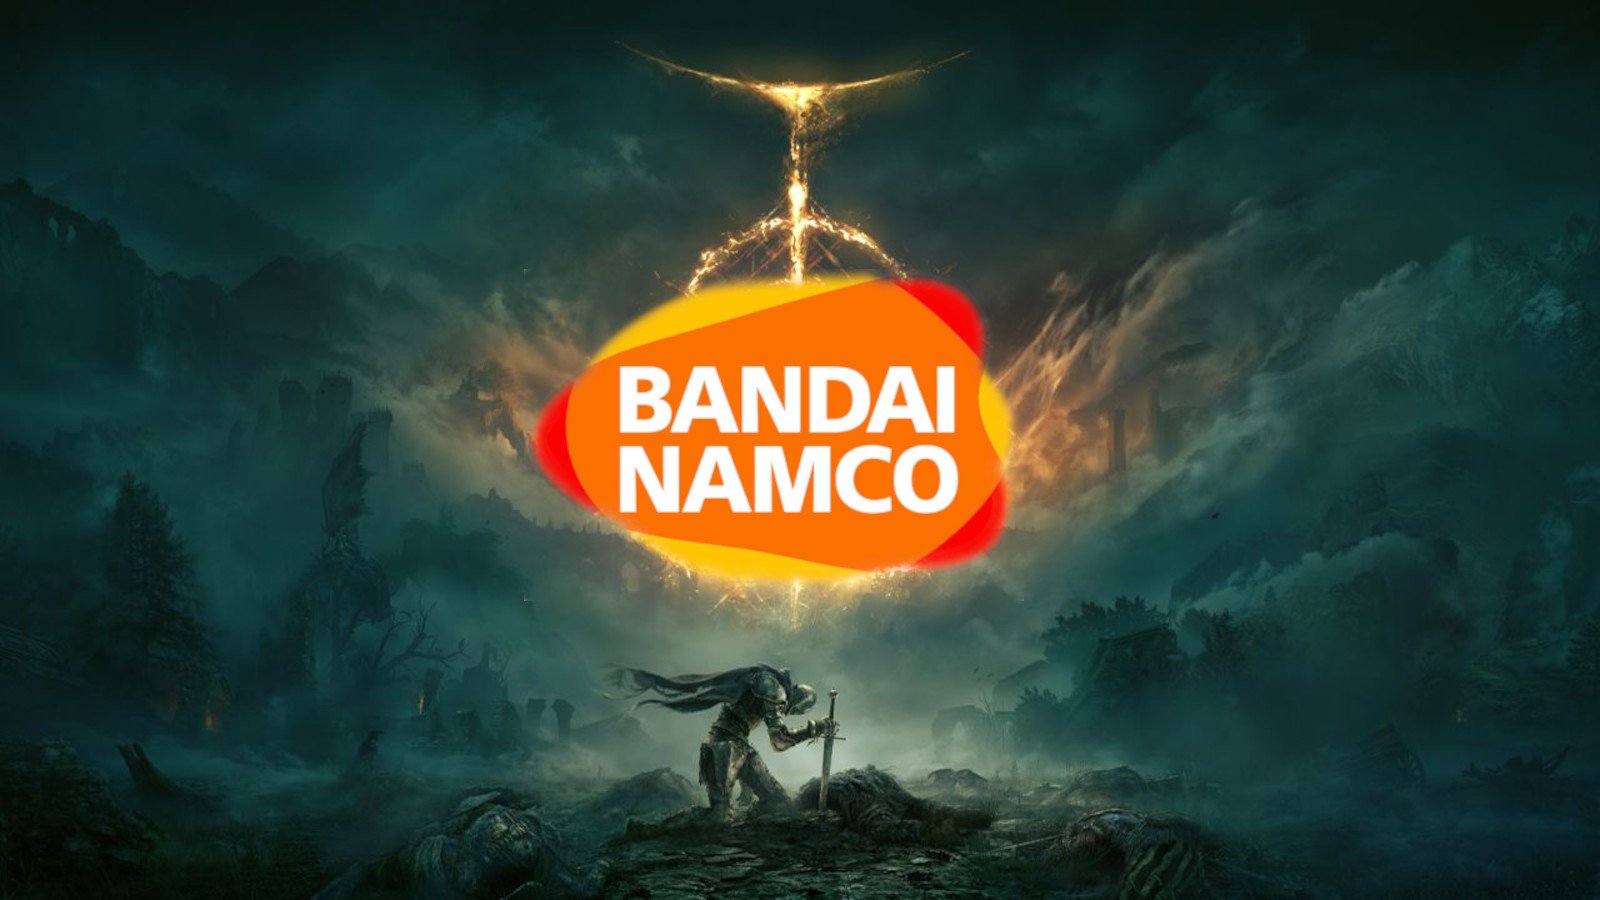 Bandai Namco logo on a screenshot from Elden Ring